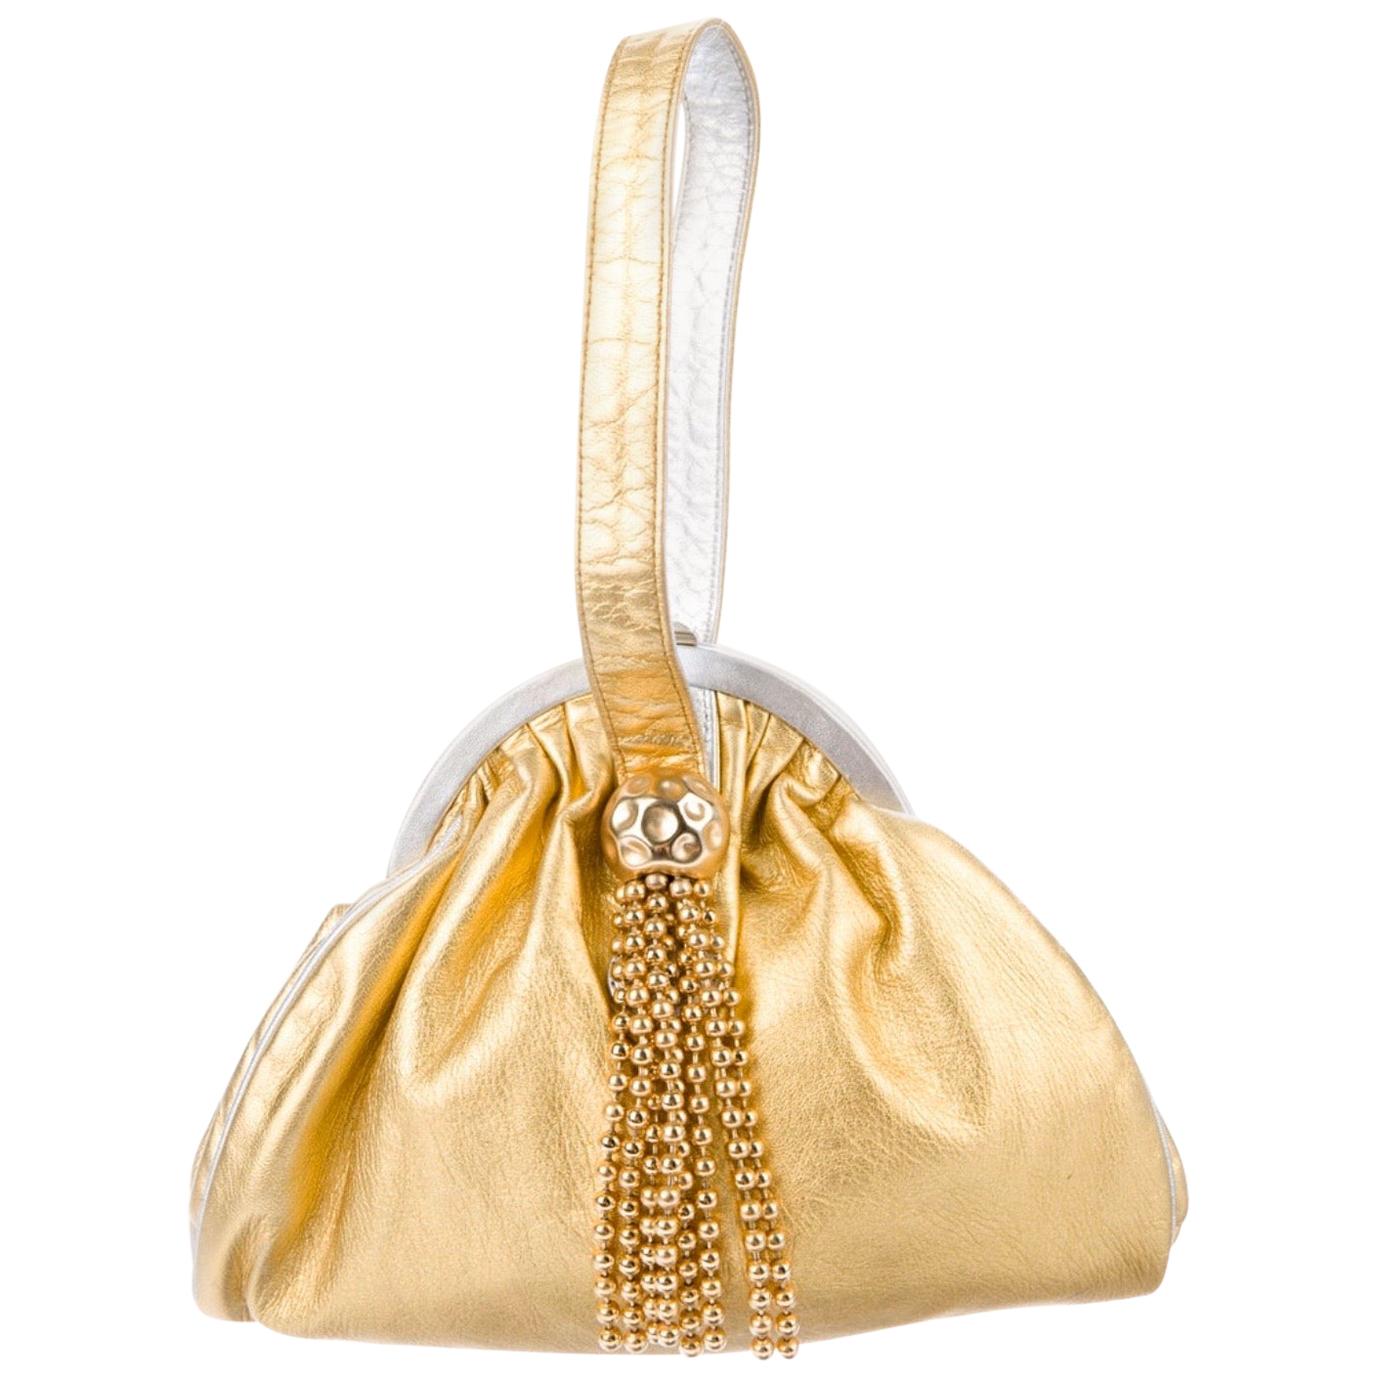 Fendi Metallic Gold Leather Evening Bag with Metal Fringe